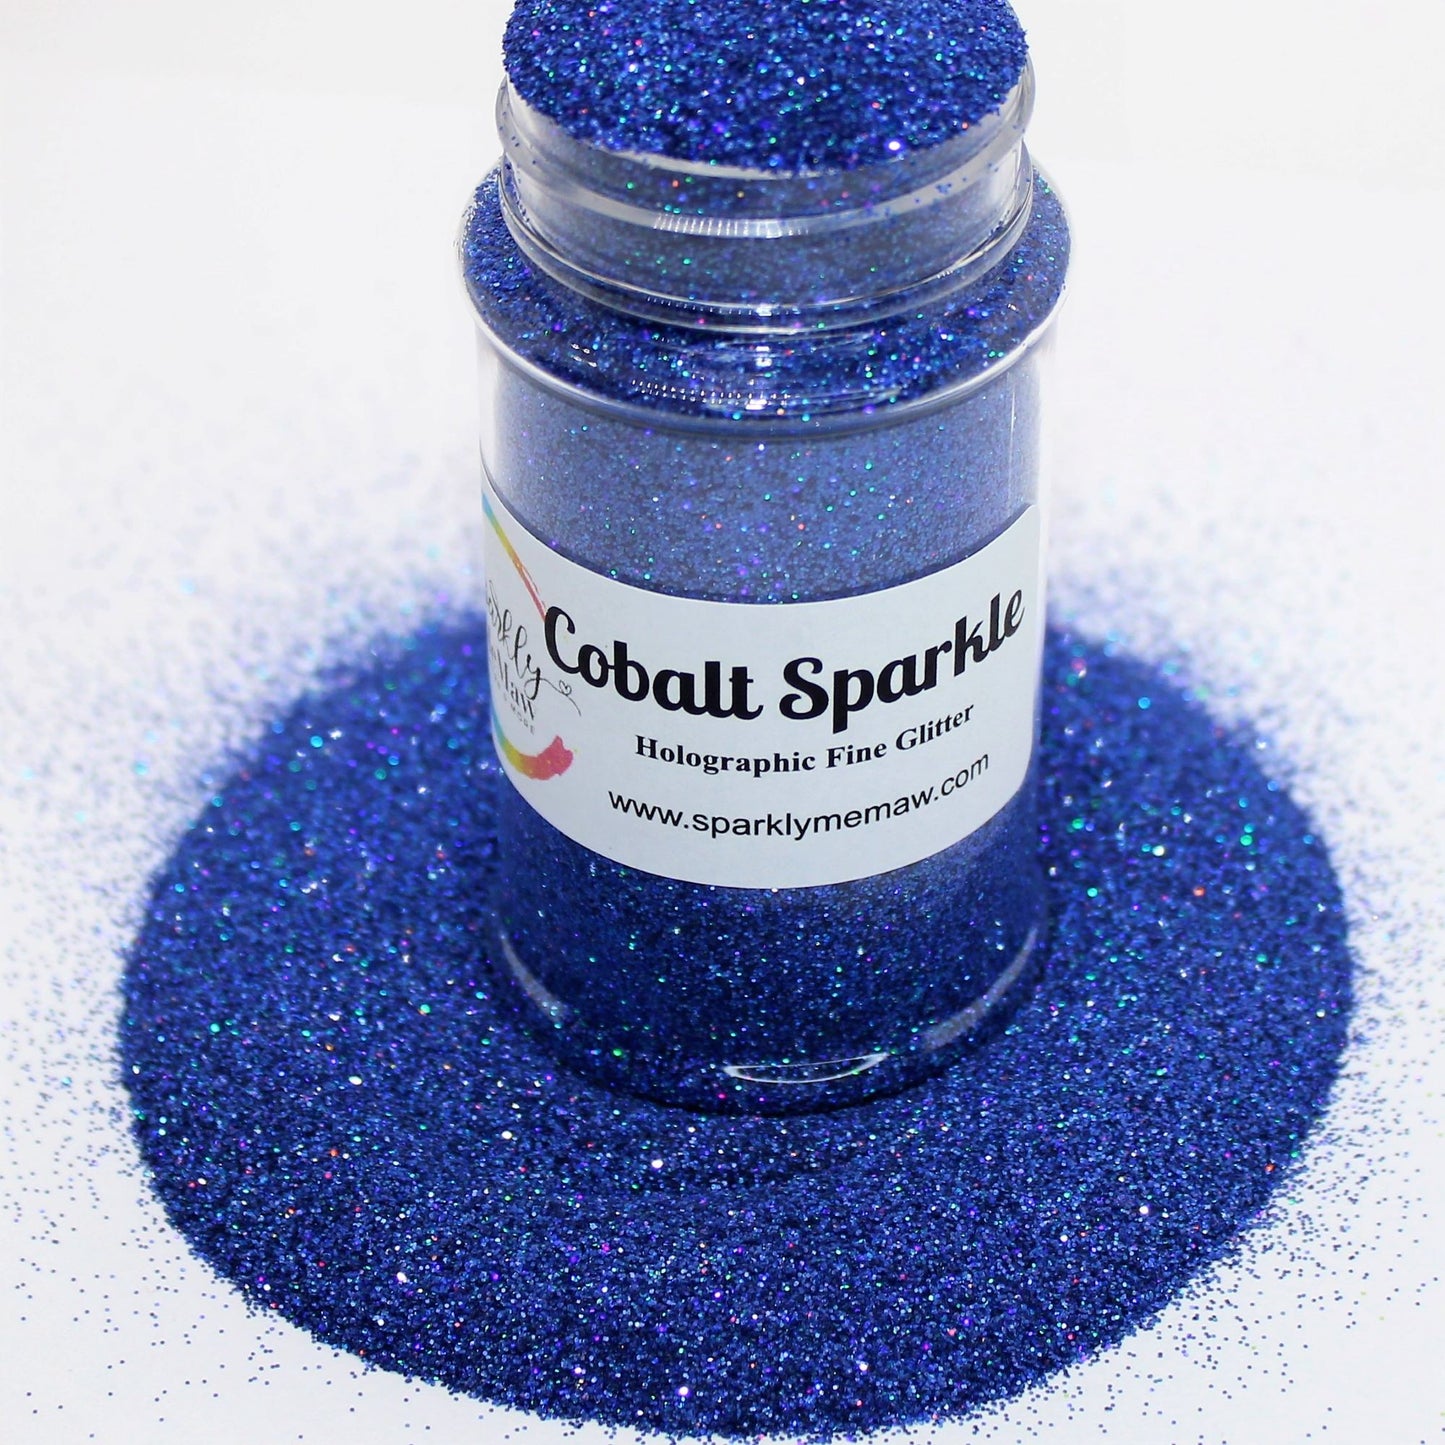 Cobalt Sparkle  Holographic Fine Glitter